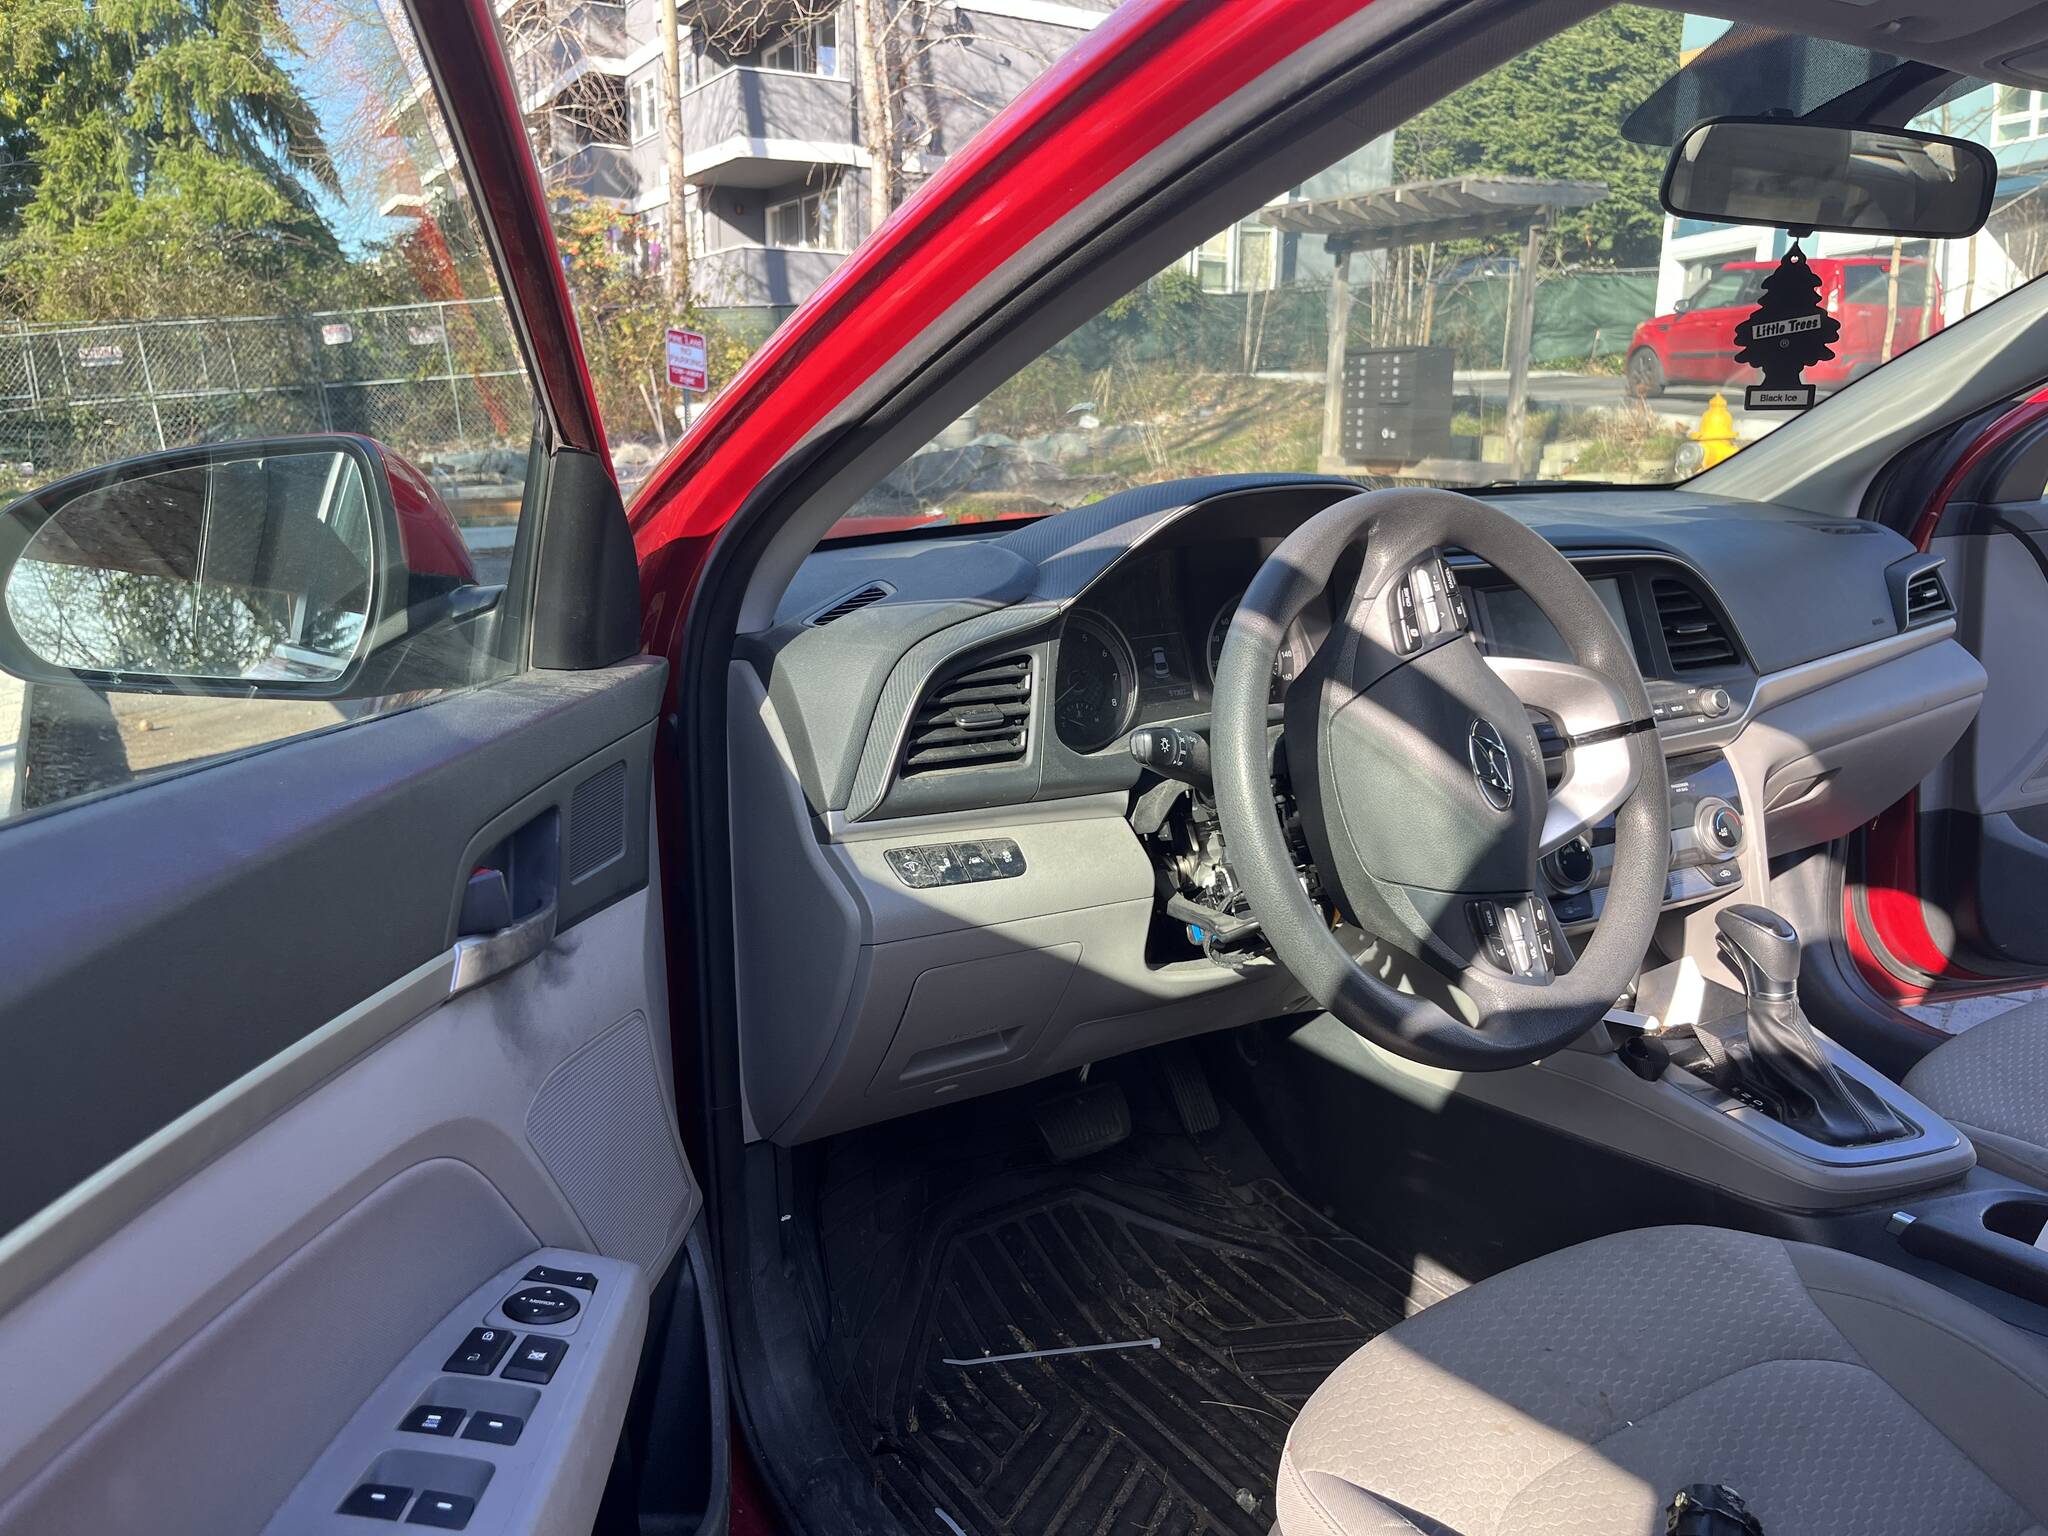 Damaged steering wheel column and ignition lock of Doug Lindquist's Hyundai Elantra. (Photo by Ben Leung/Renton Reporter)